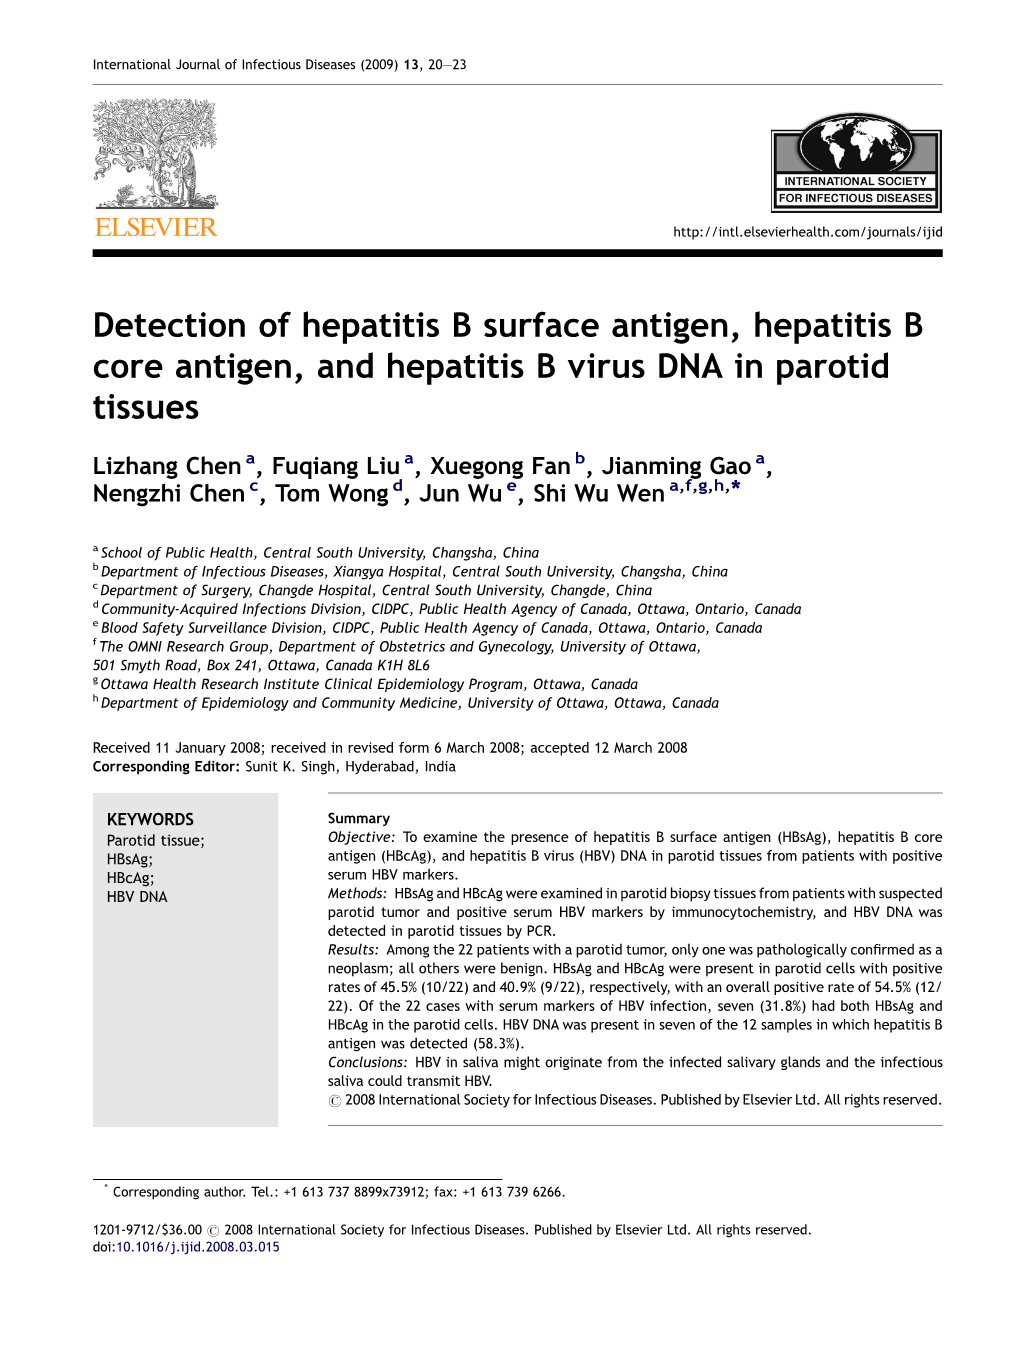 Detection of Hepatitis B Surface Antigen, Hepatitis B Core Antigen, and Hepatitis B Virus DNA in Parotid Tissues